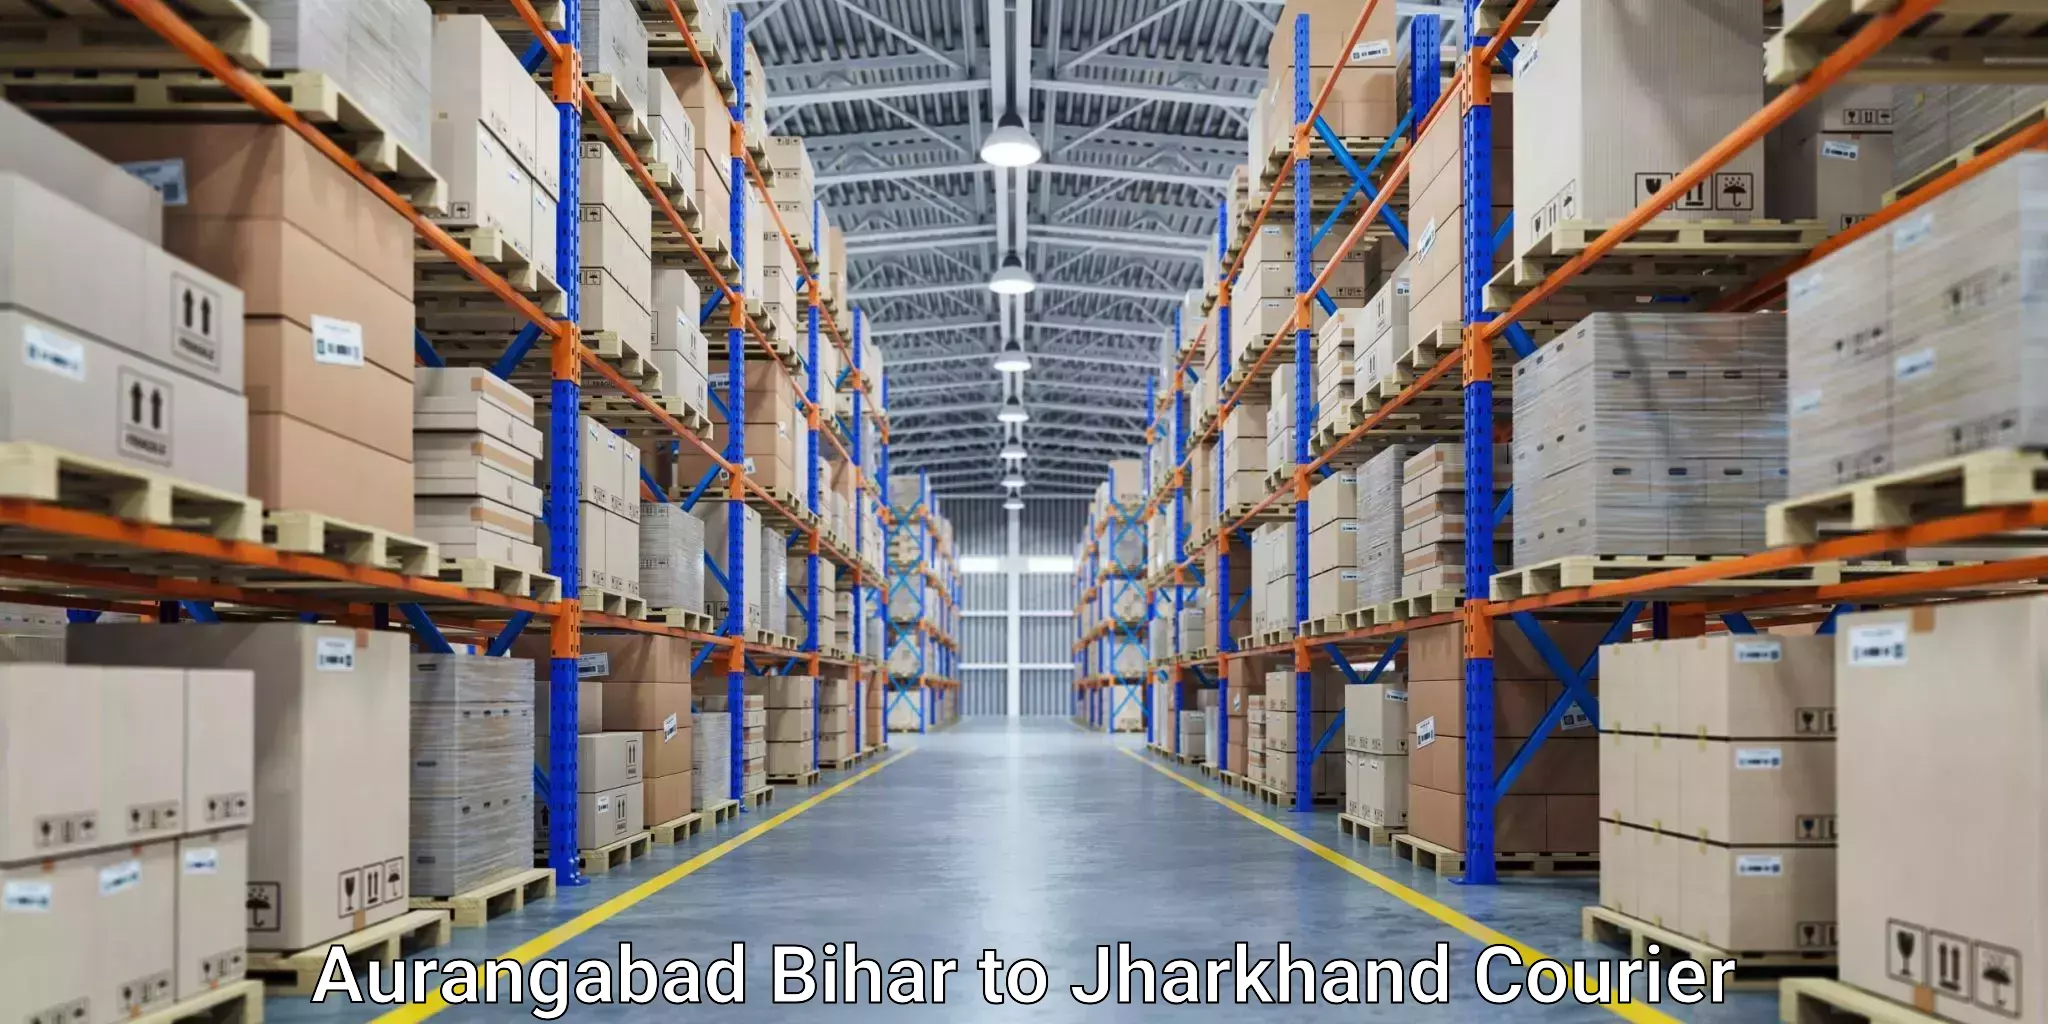 State-of-the-art courier technology Aurangabad Bihar to Medininagar